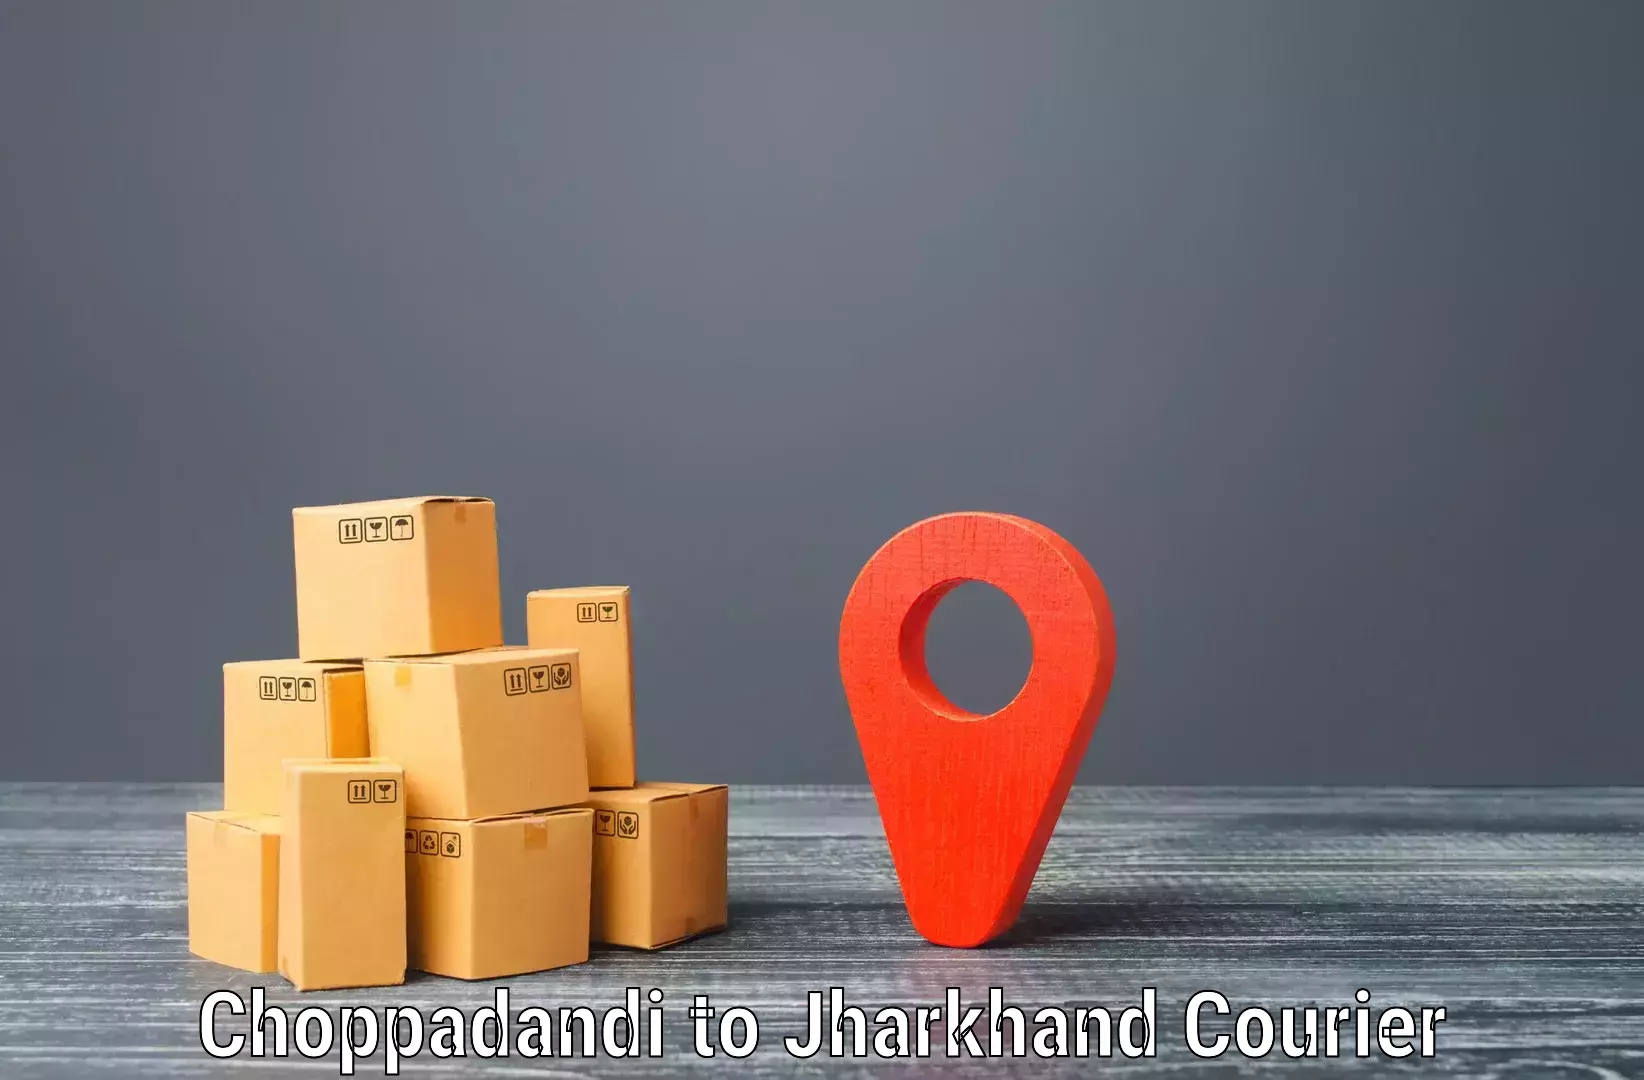 Global shipping networks in Choppadandi to Bokaro